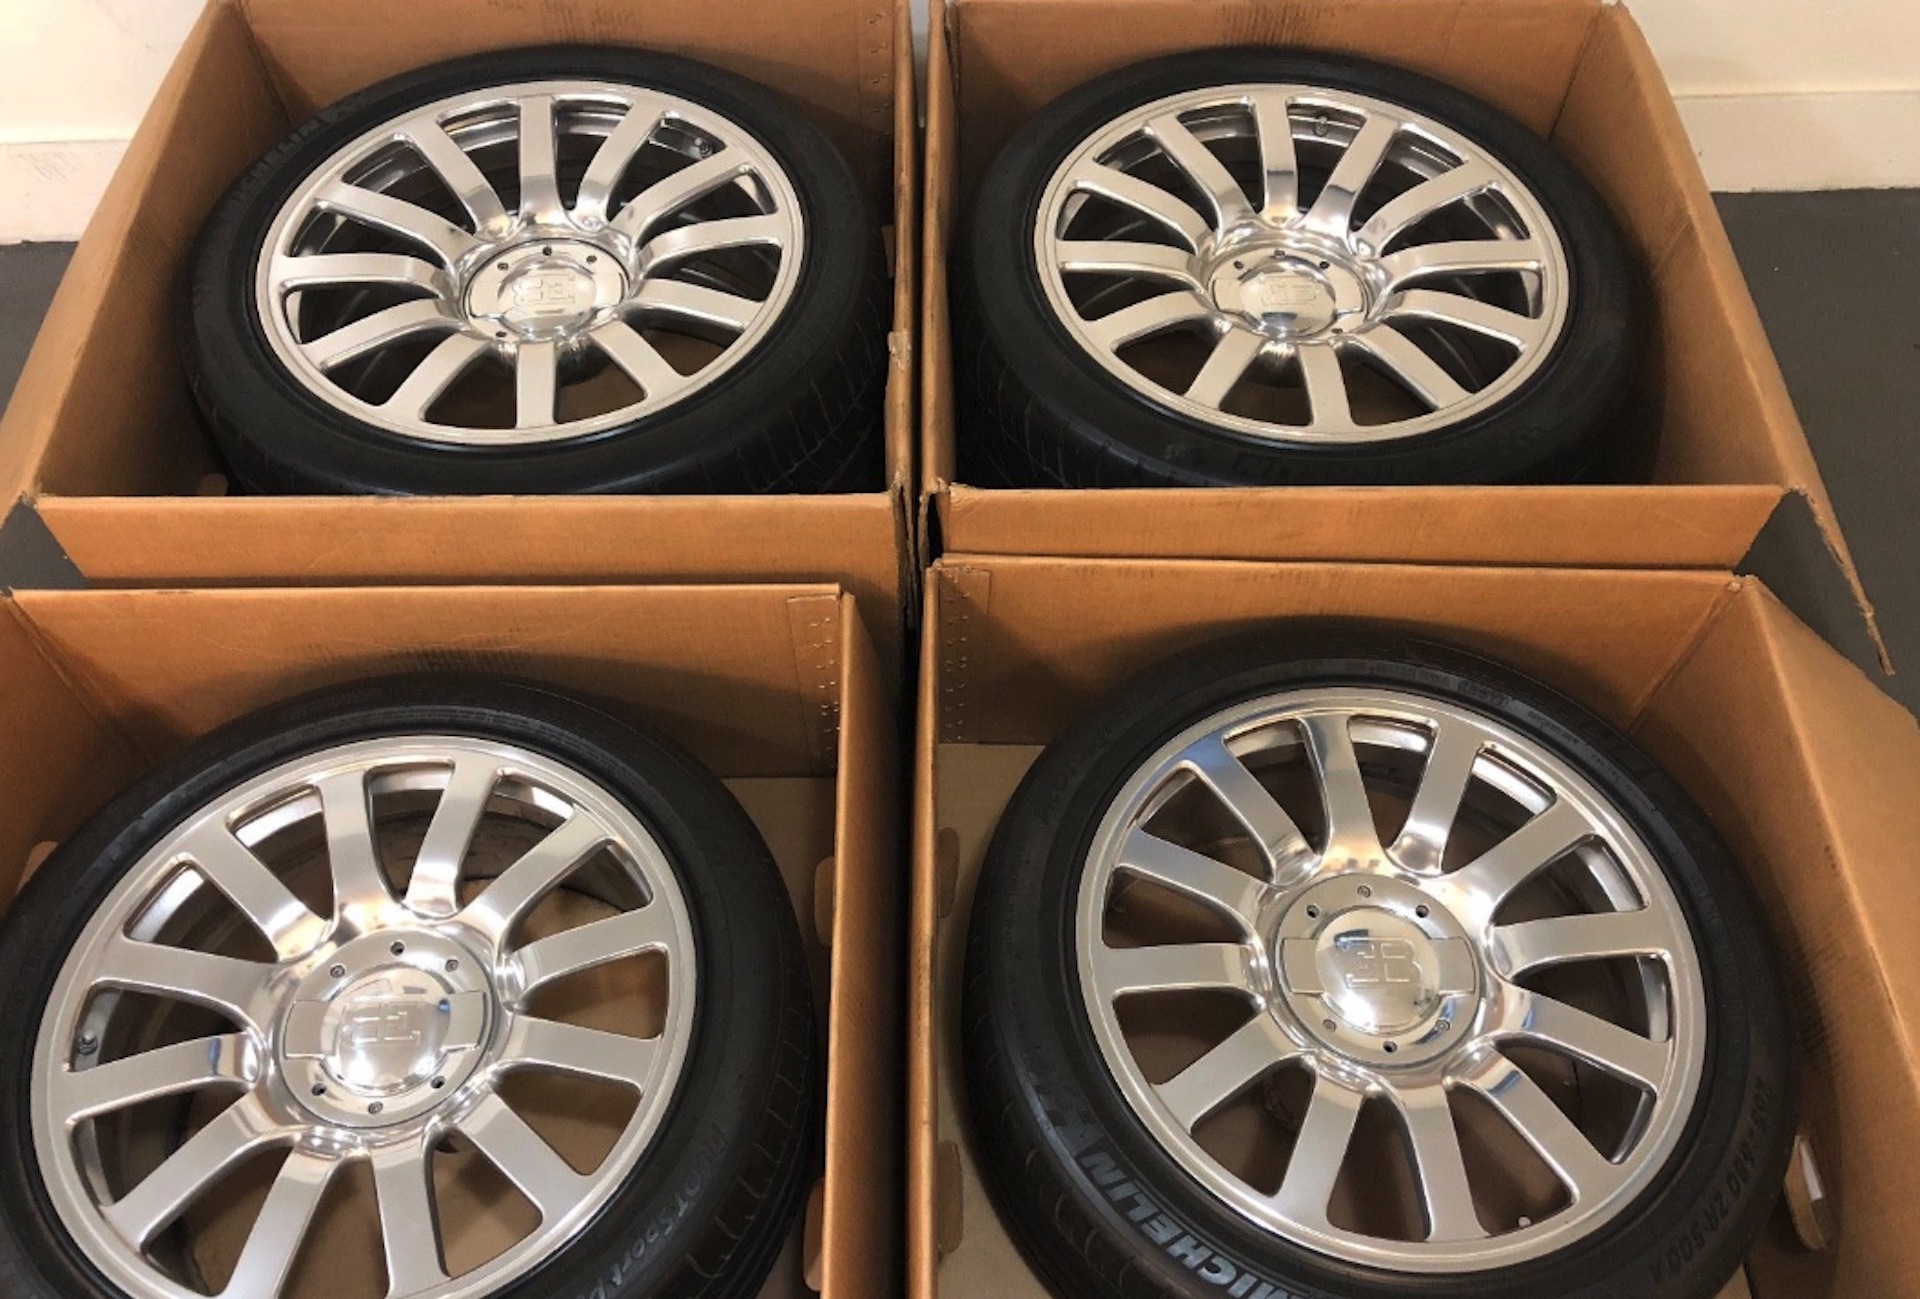 $100,000 set of Bugatti Veyron wheels and tires pops up on eBay